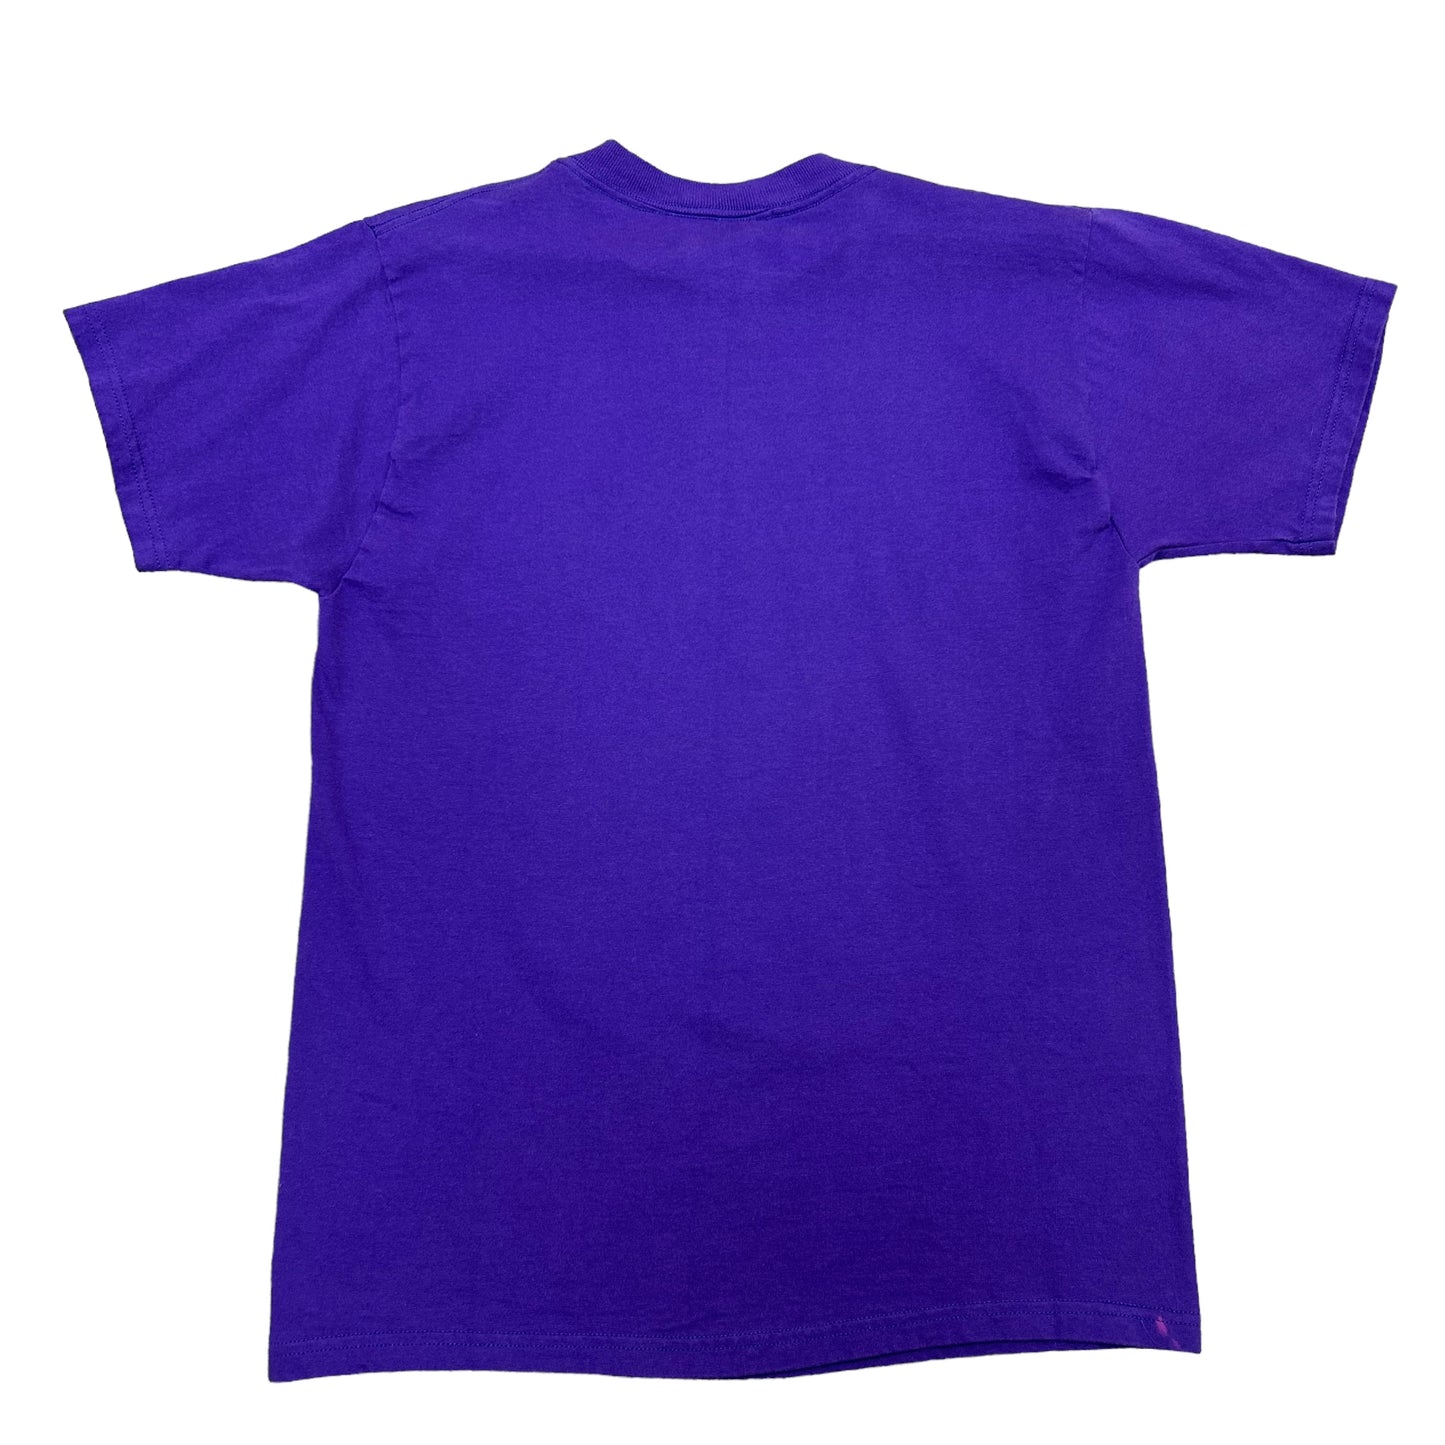 Vintage Y2K New Orleans Mardi Gras Jester Purple Graphic T-Shirt - Size Medium